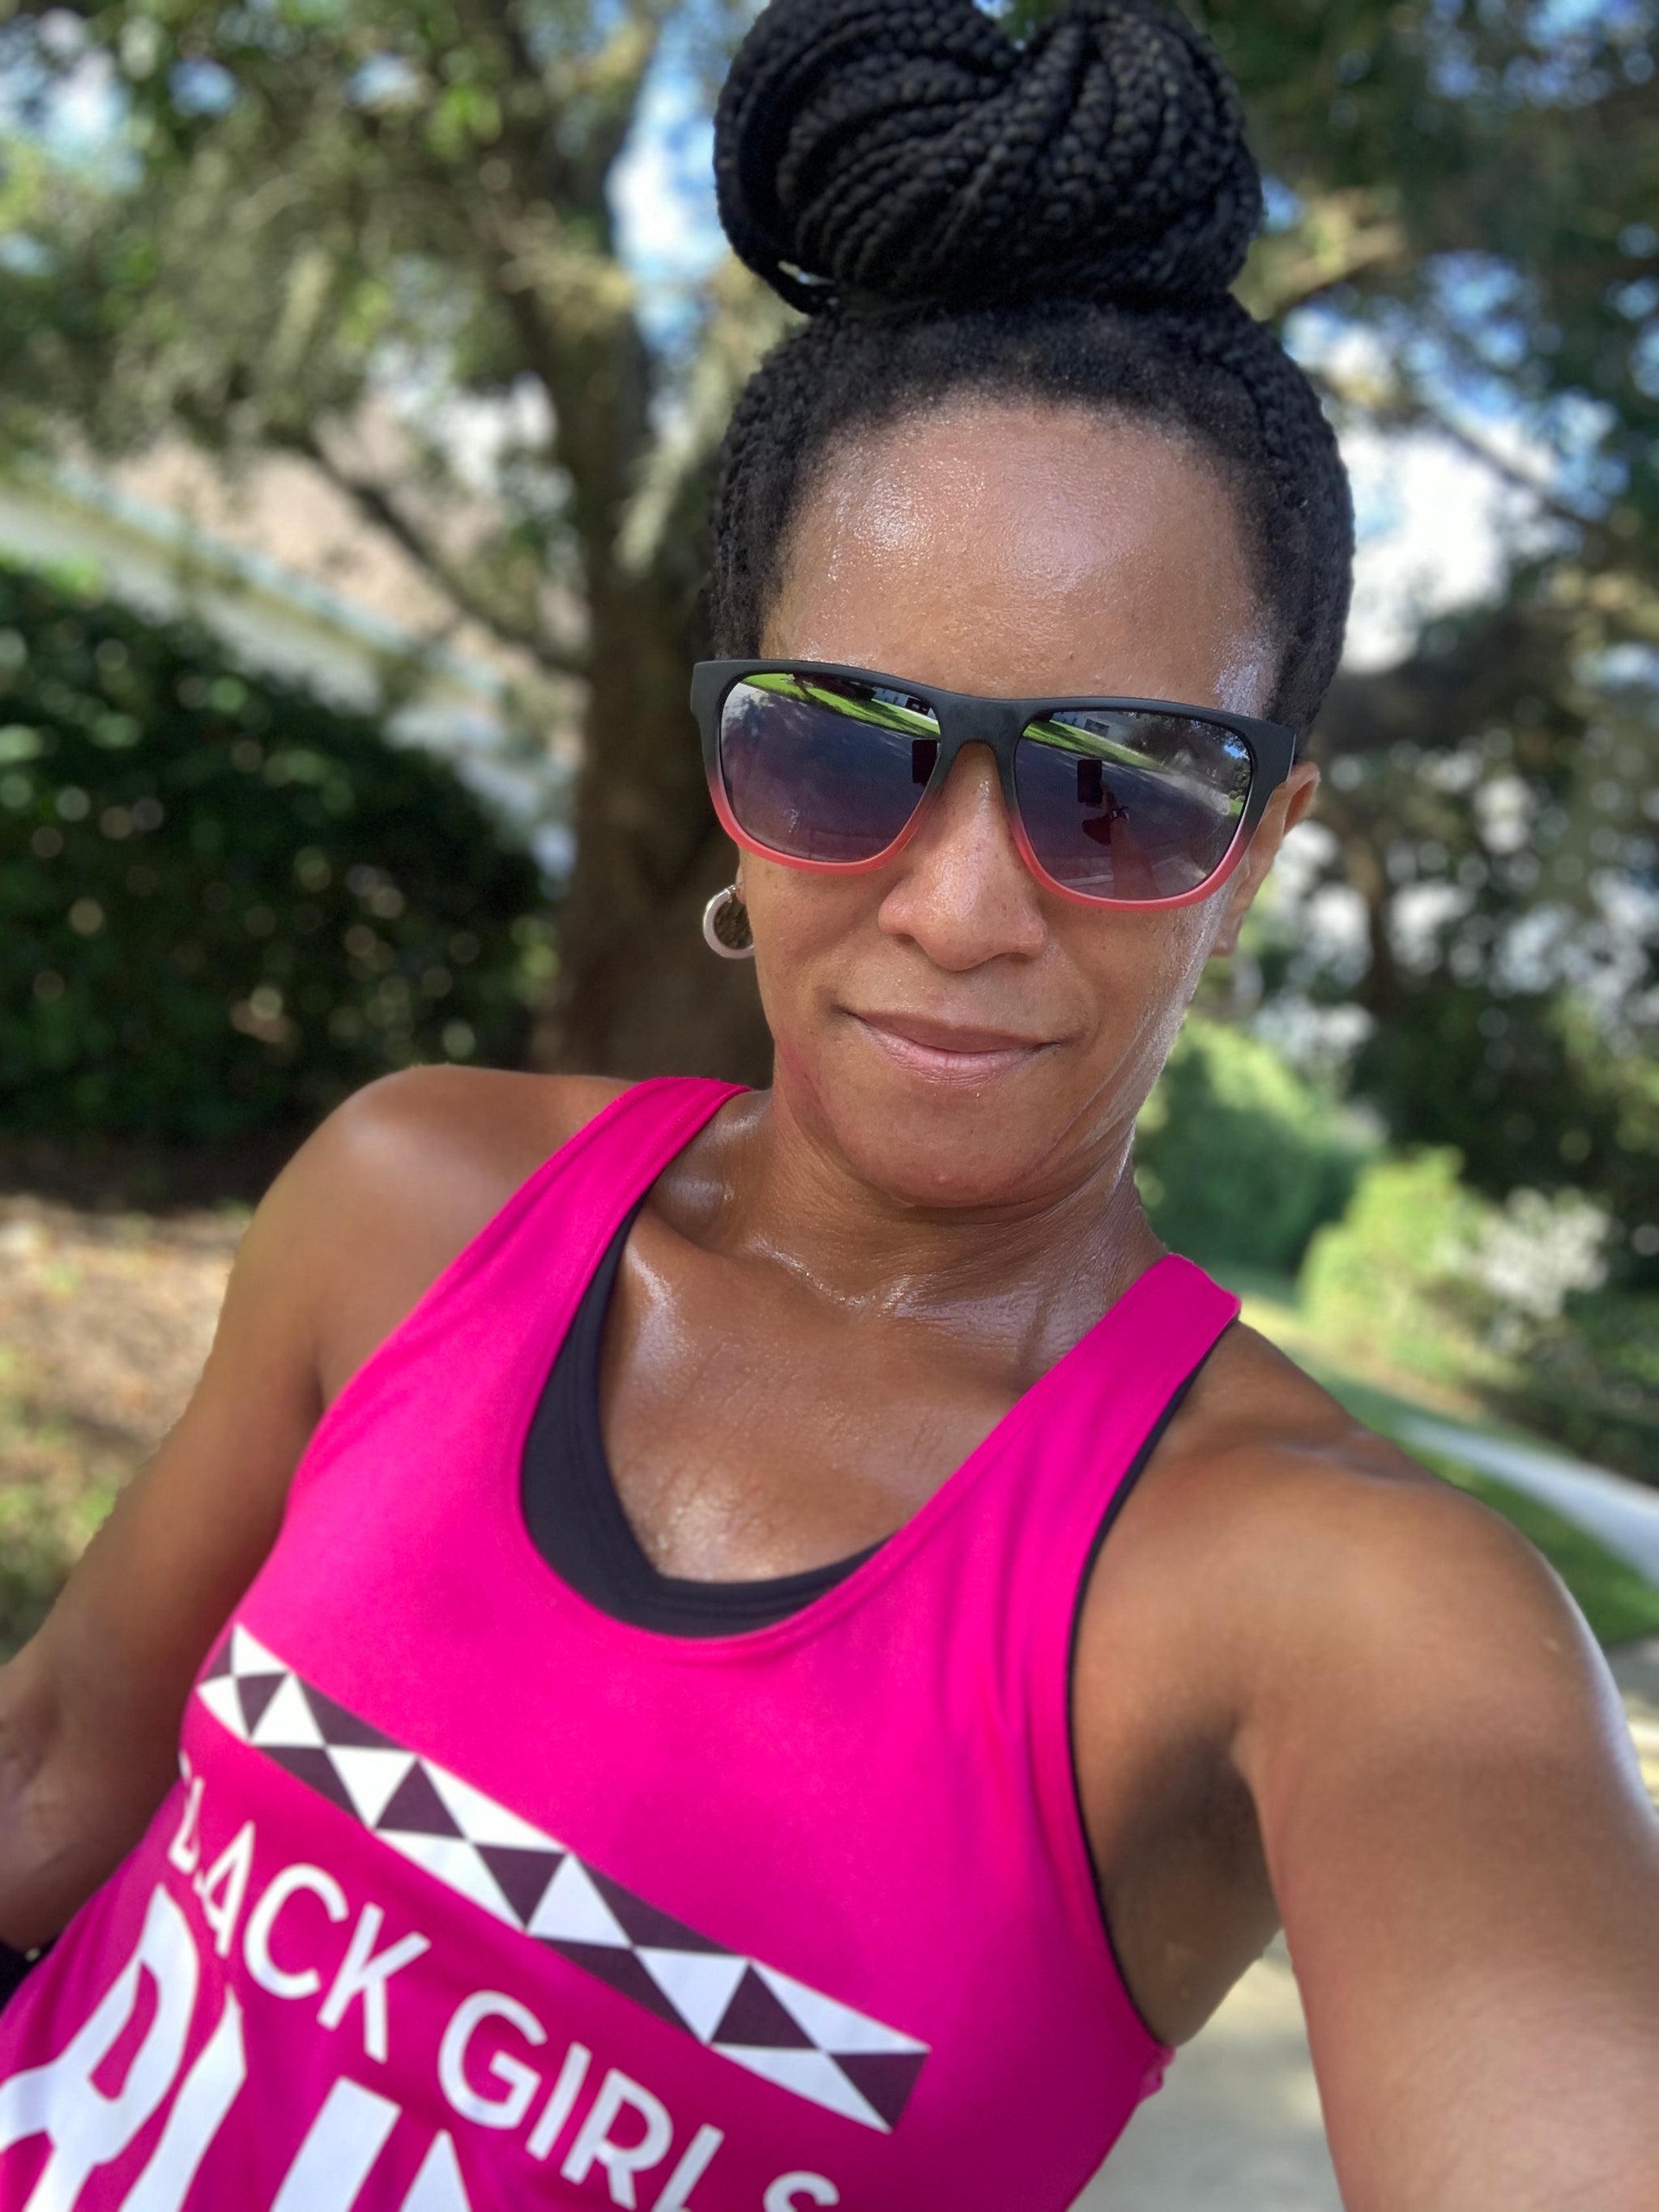 I am a Runner Running Sunglasses - Black Girls RUN!